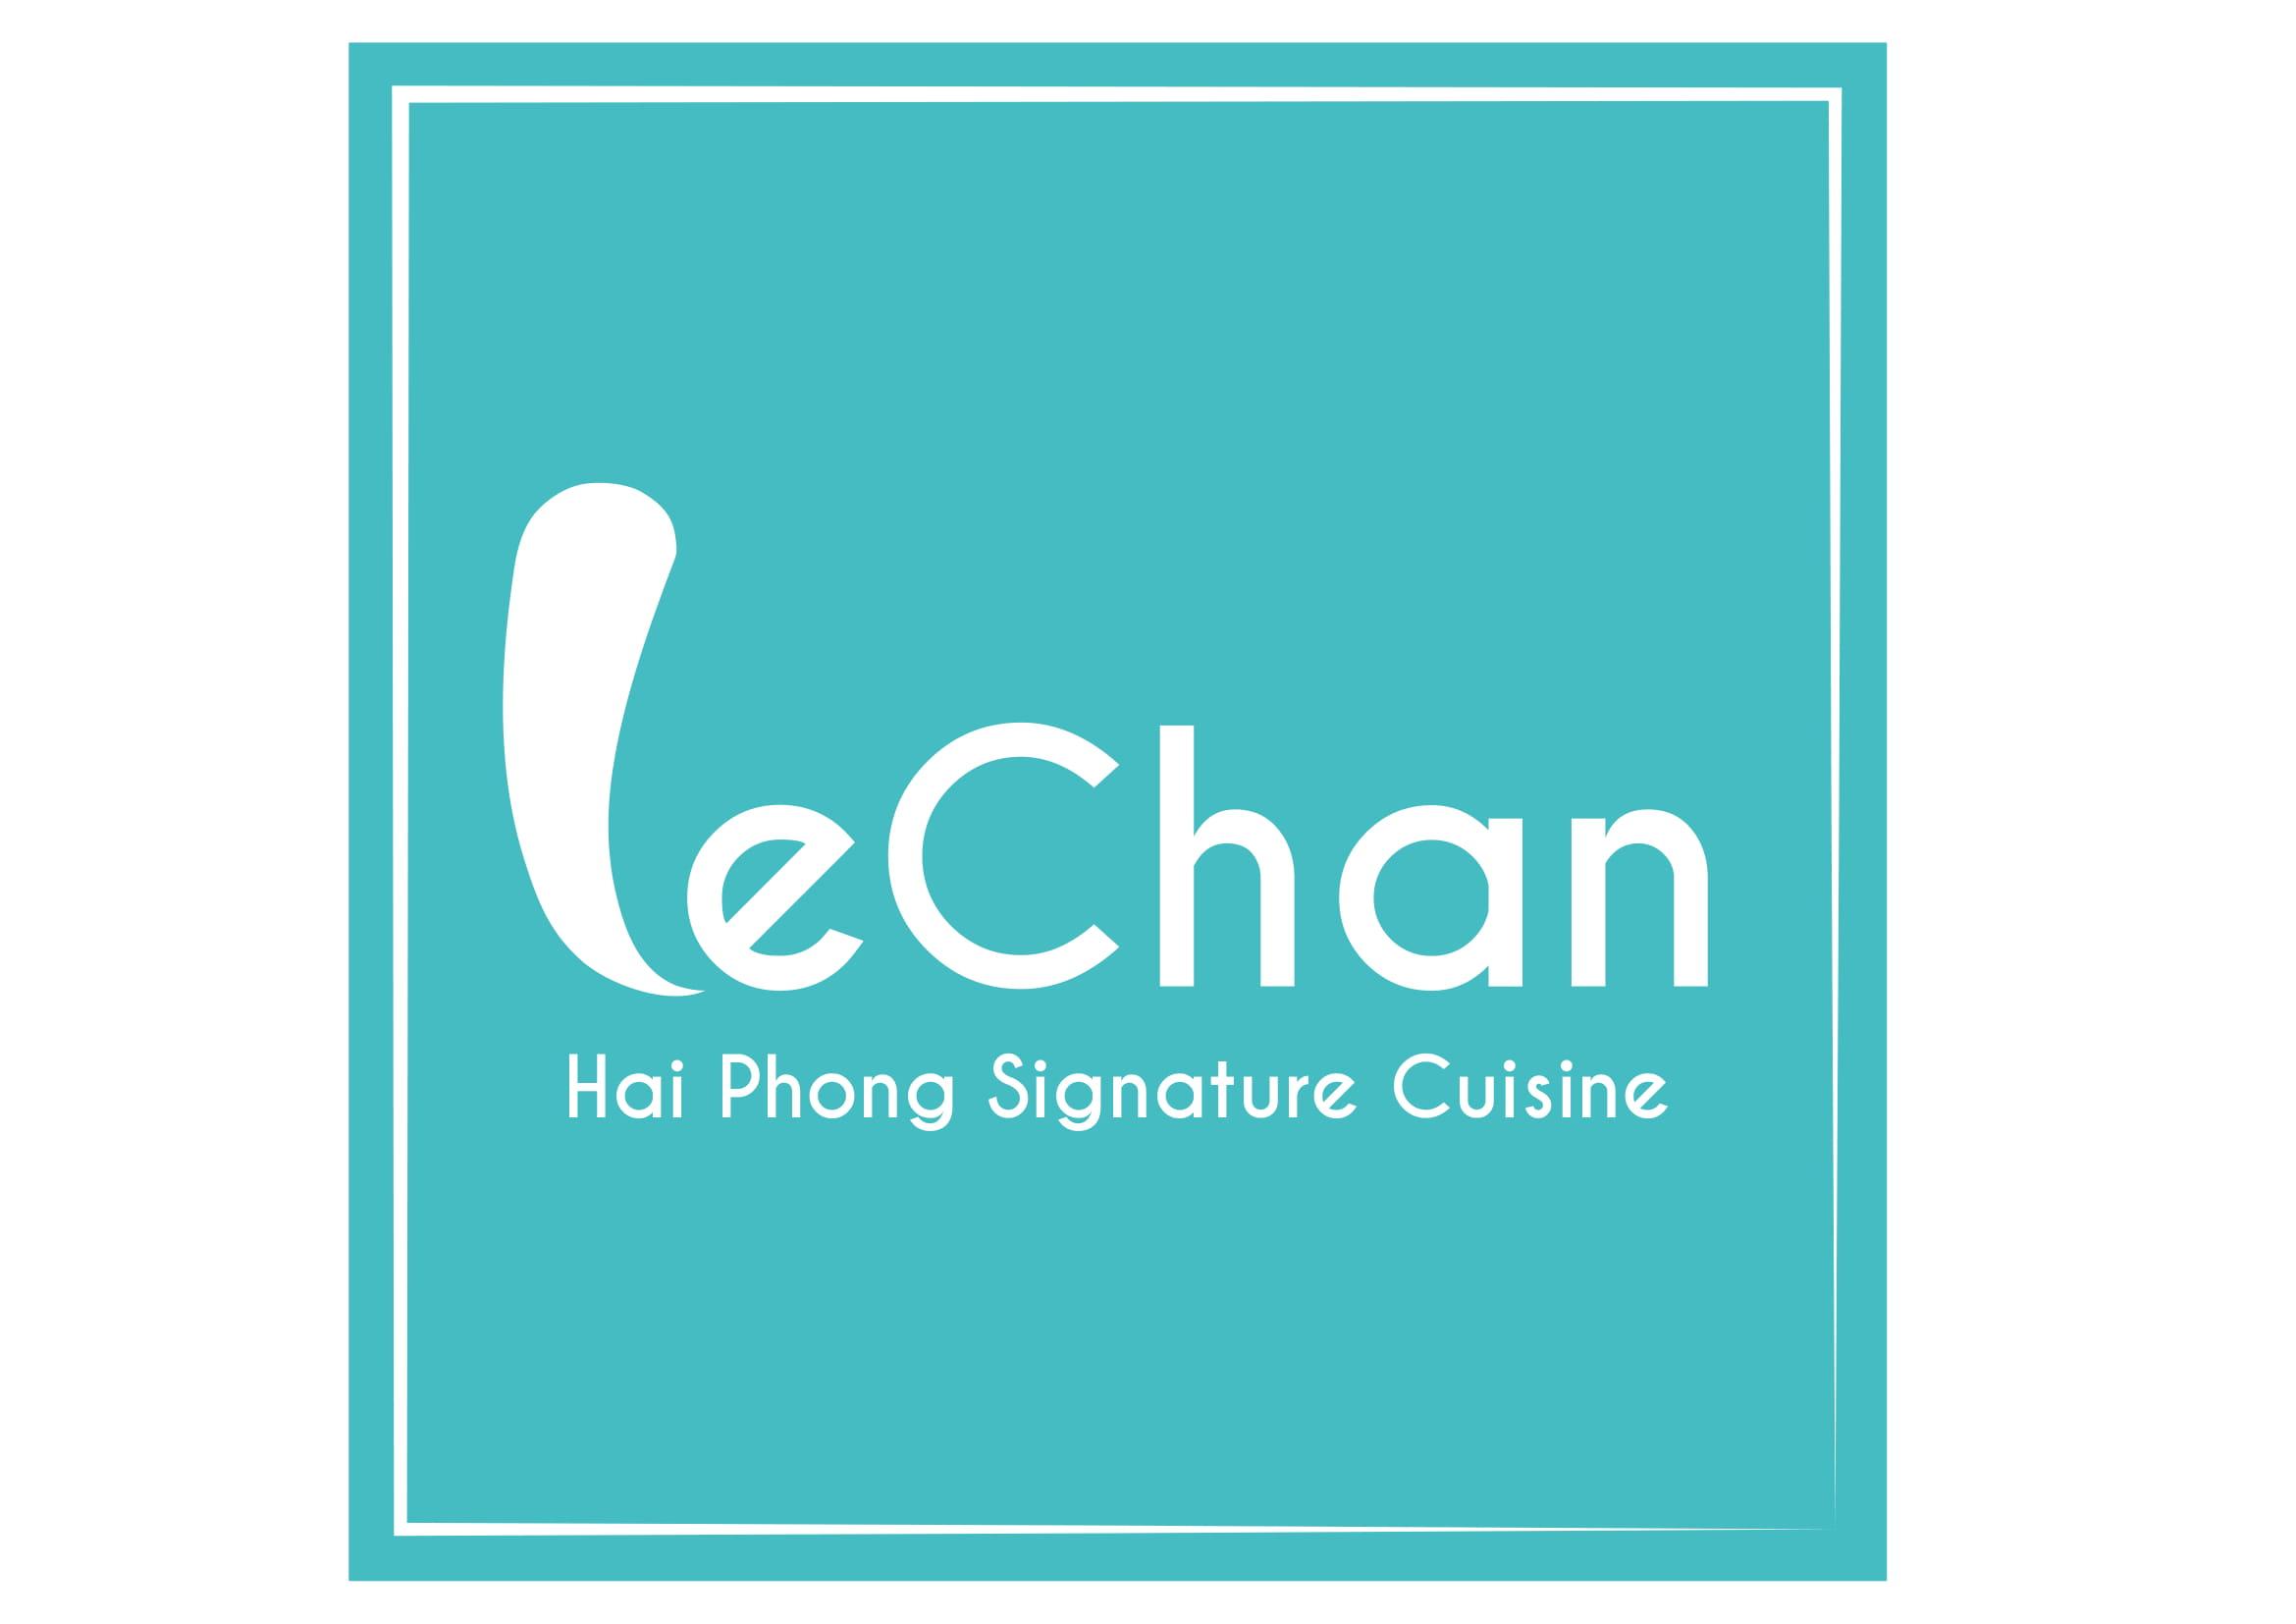 LeChan Restaurant